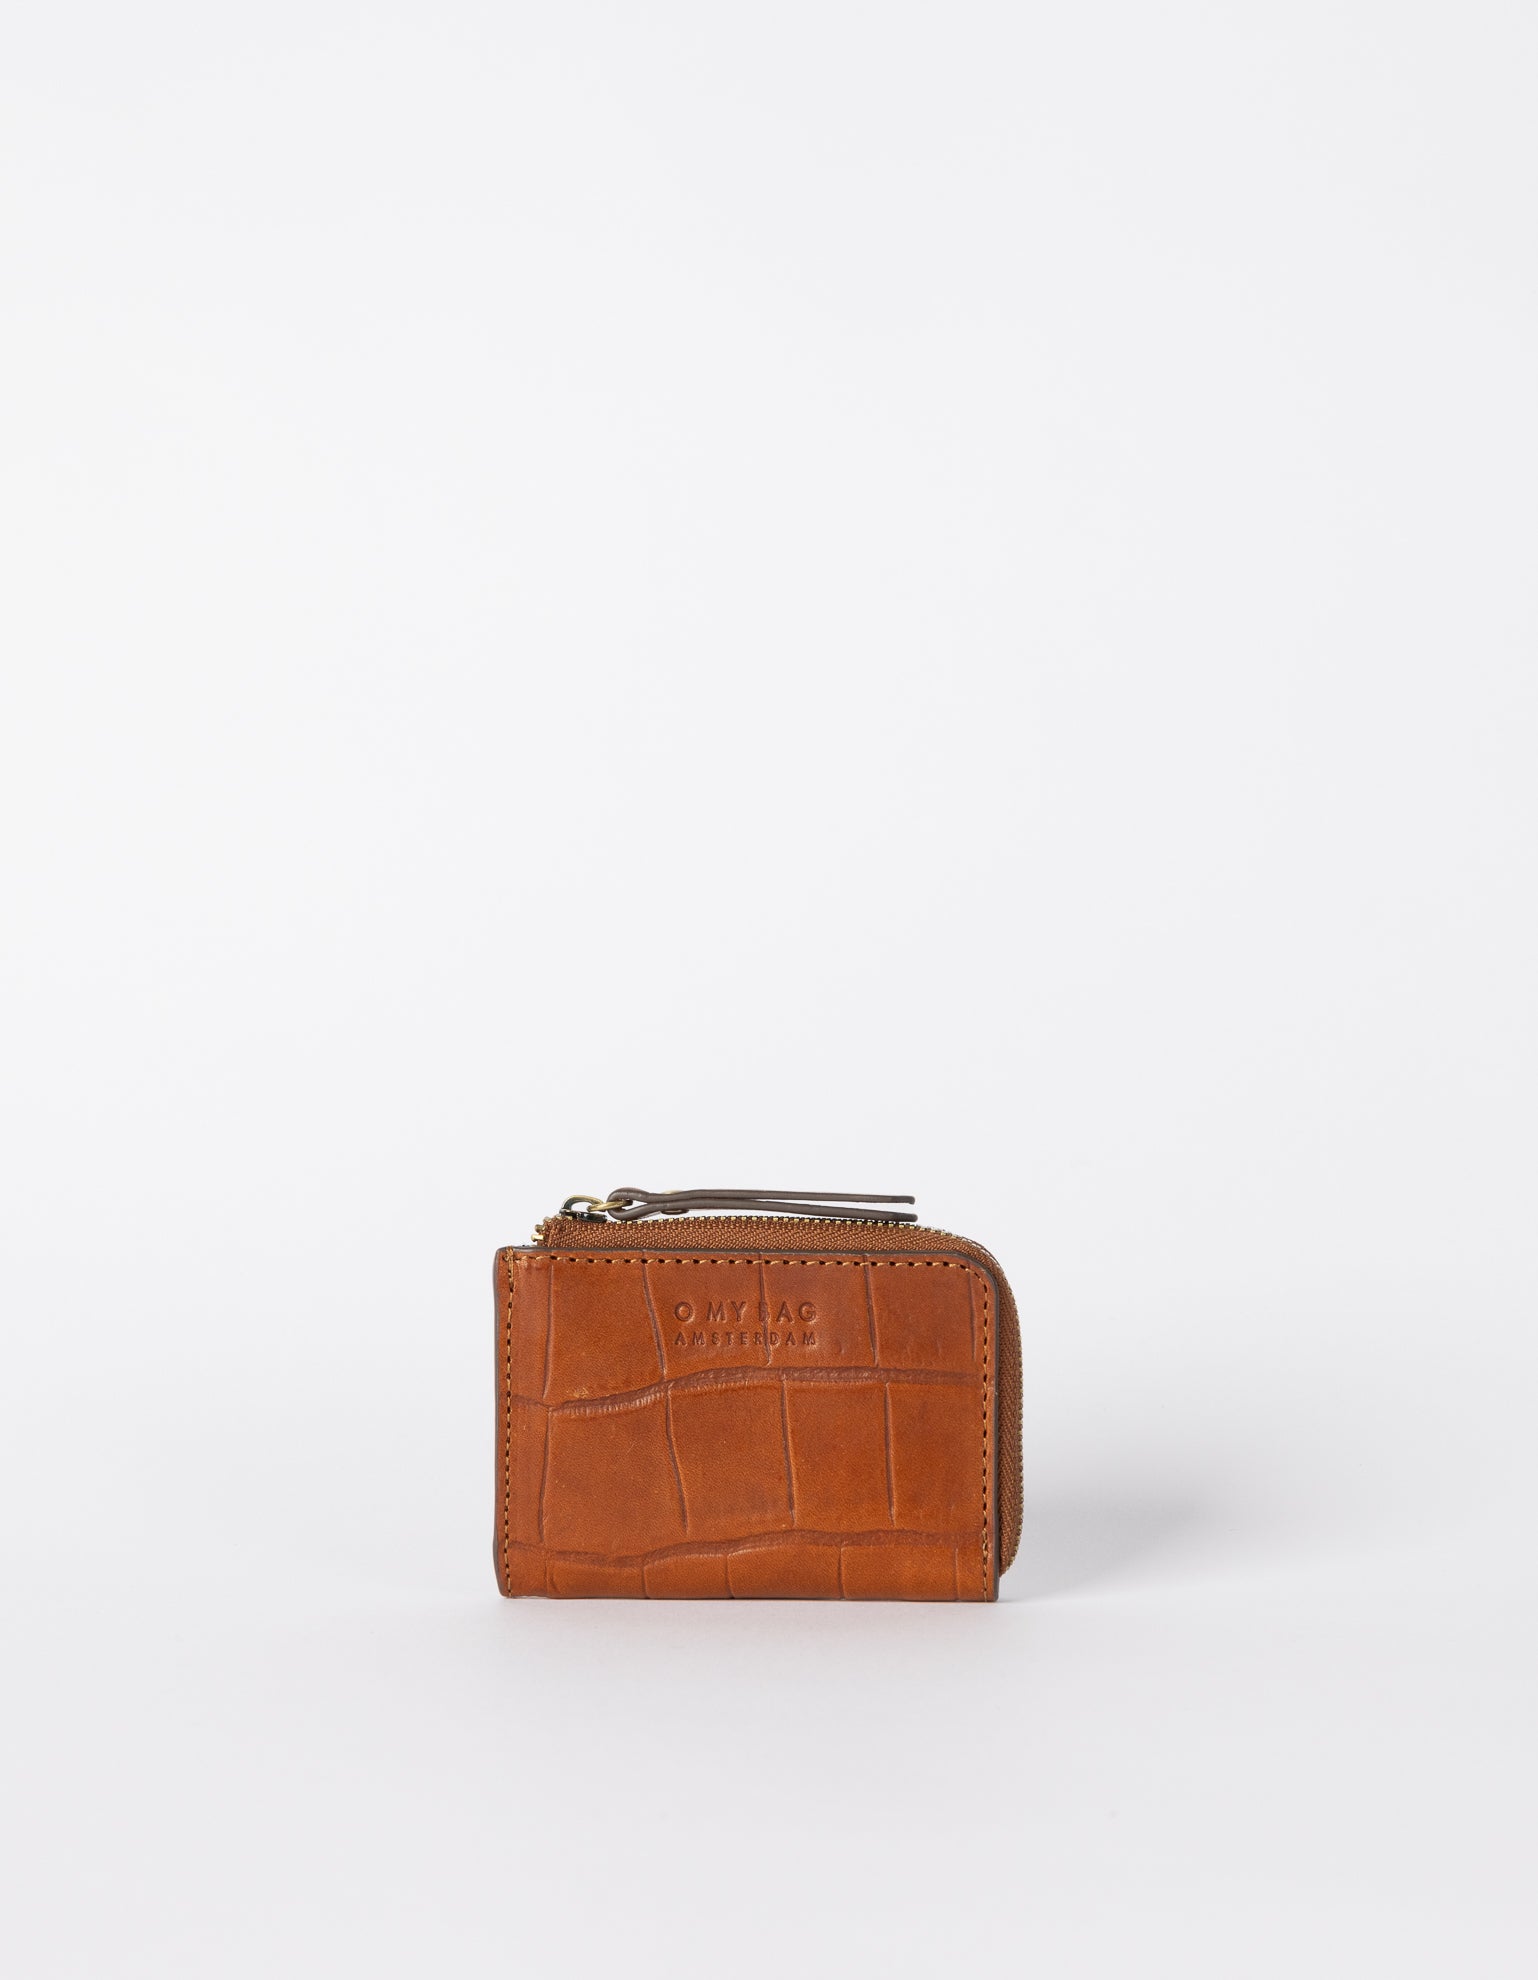 Small Cognac Croco coin purse. Square shape. Front image.